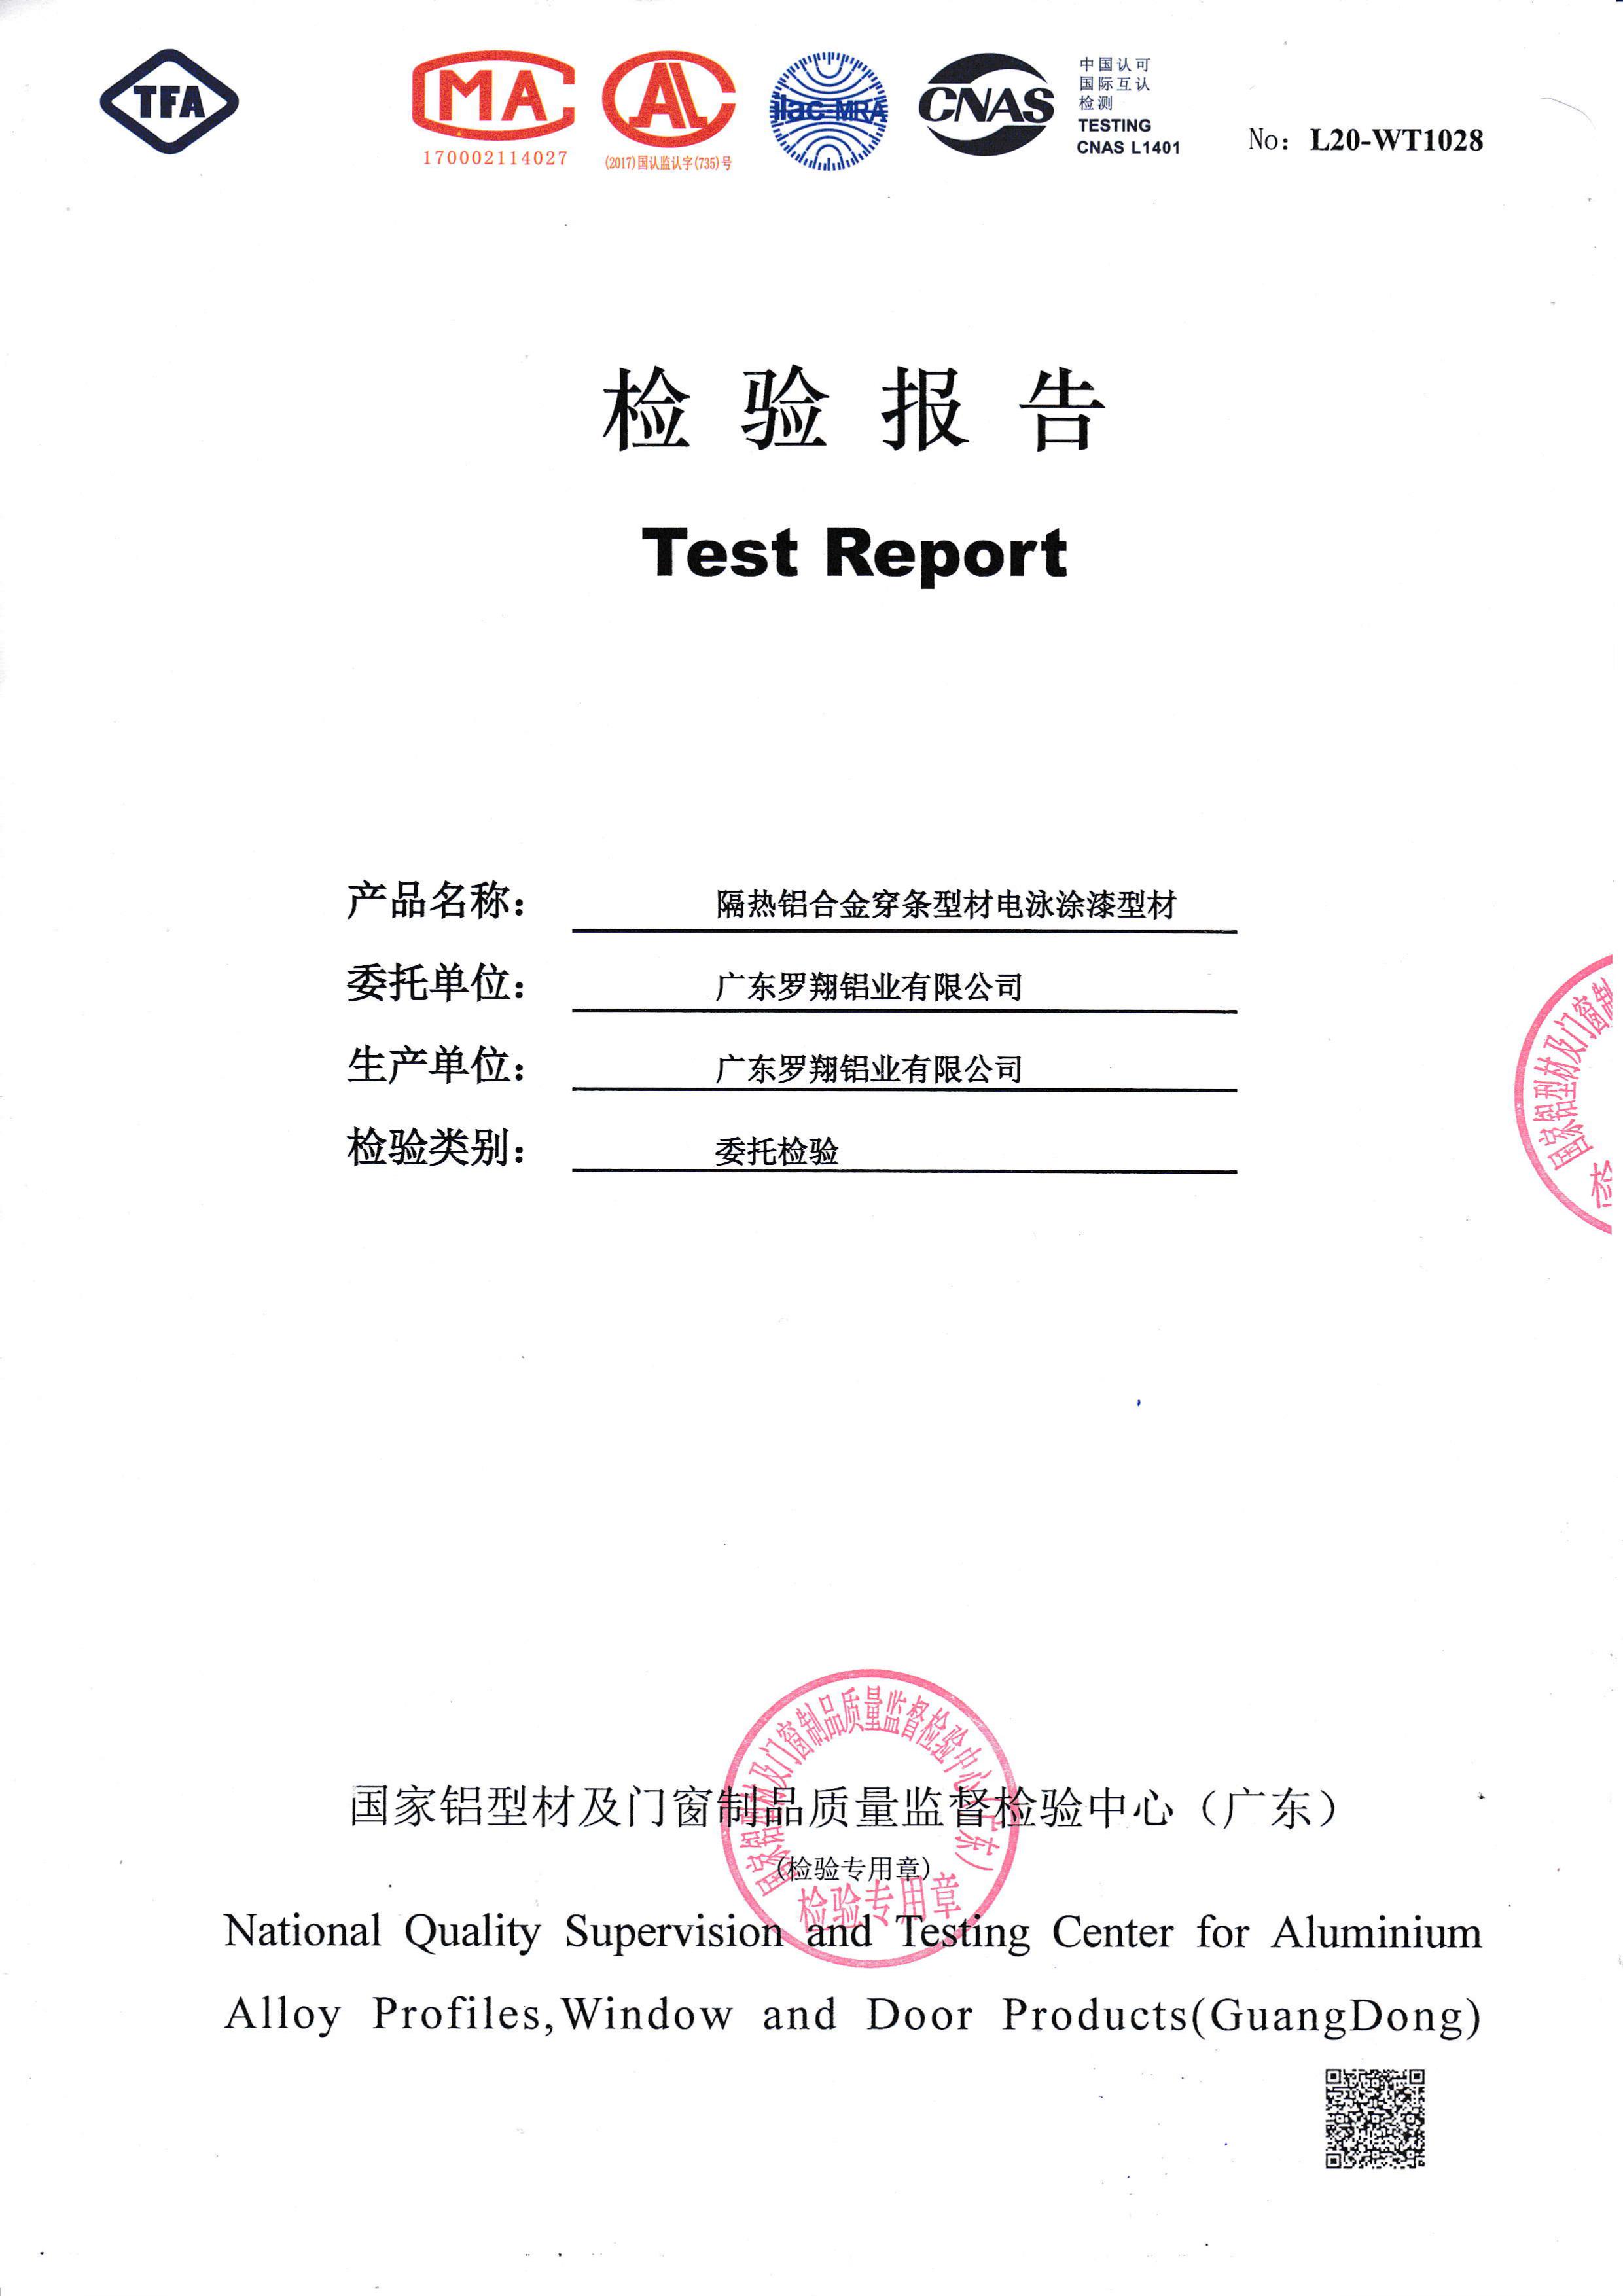 Inspection report of electrophoretic coating strip insulation (1)